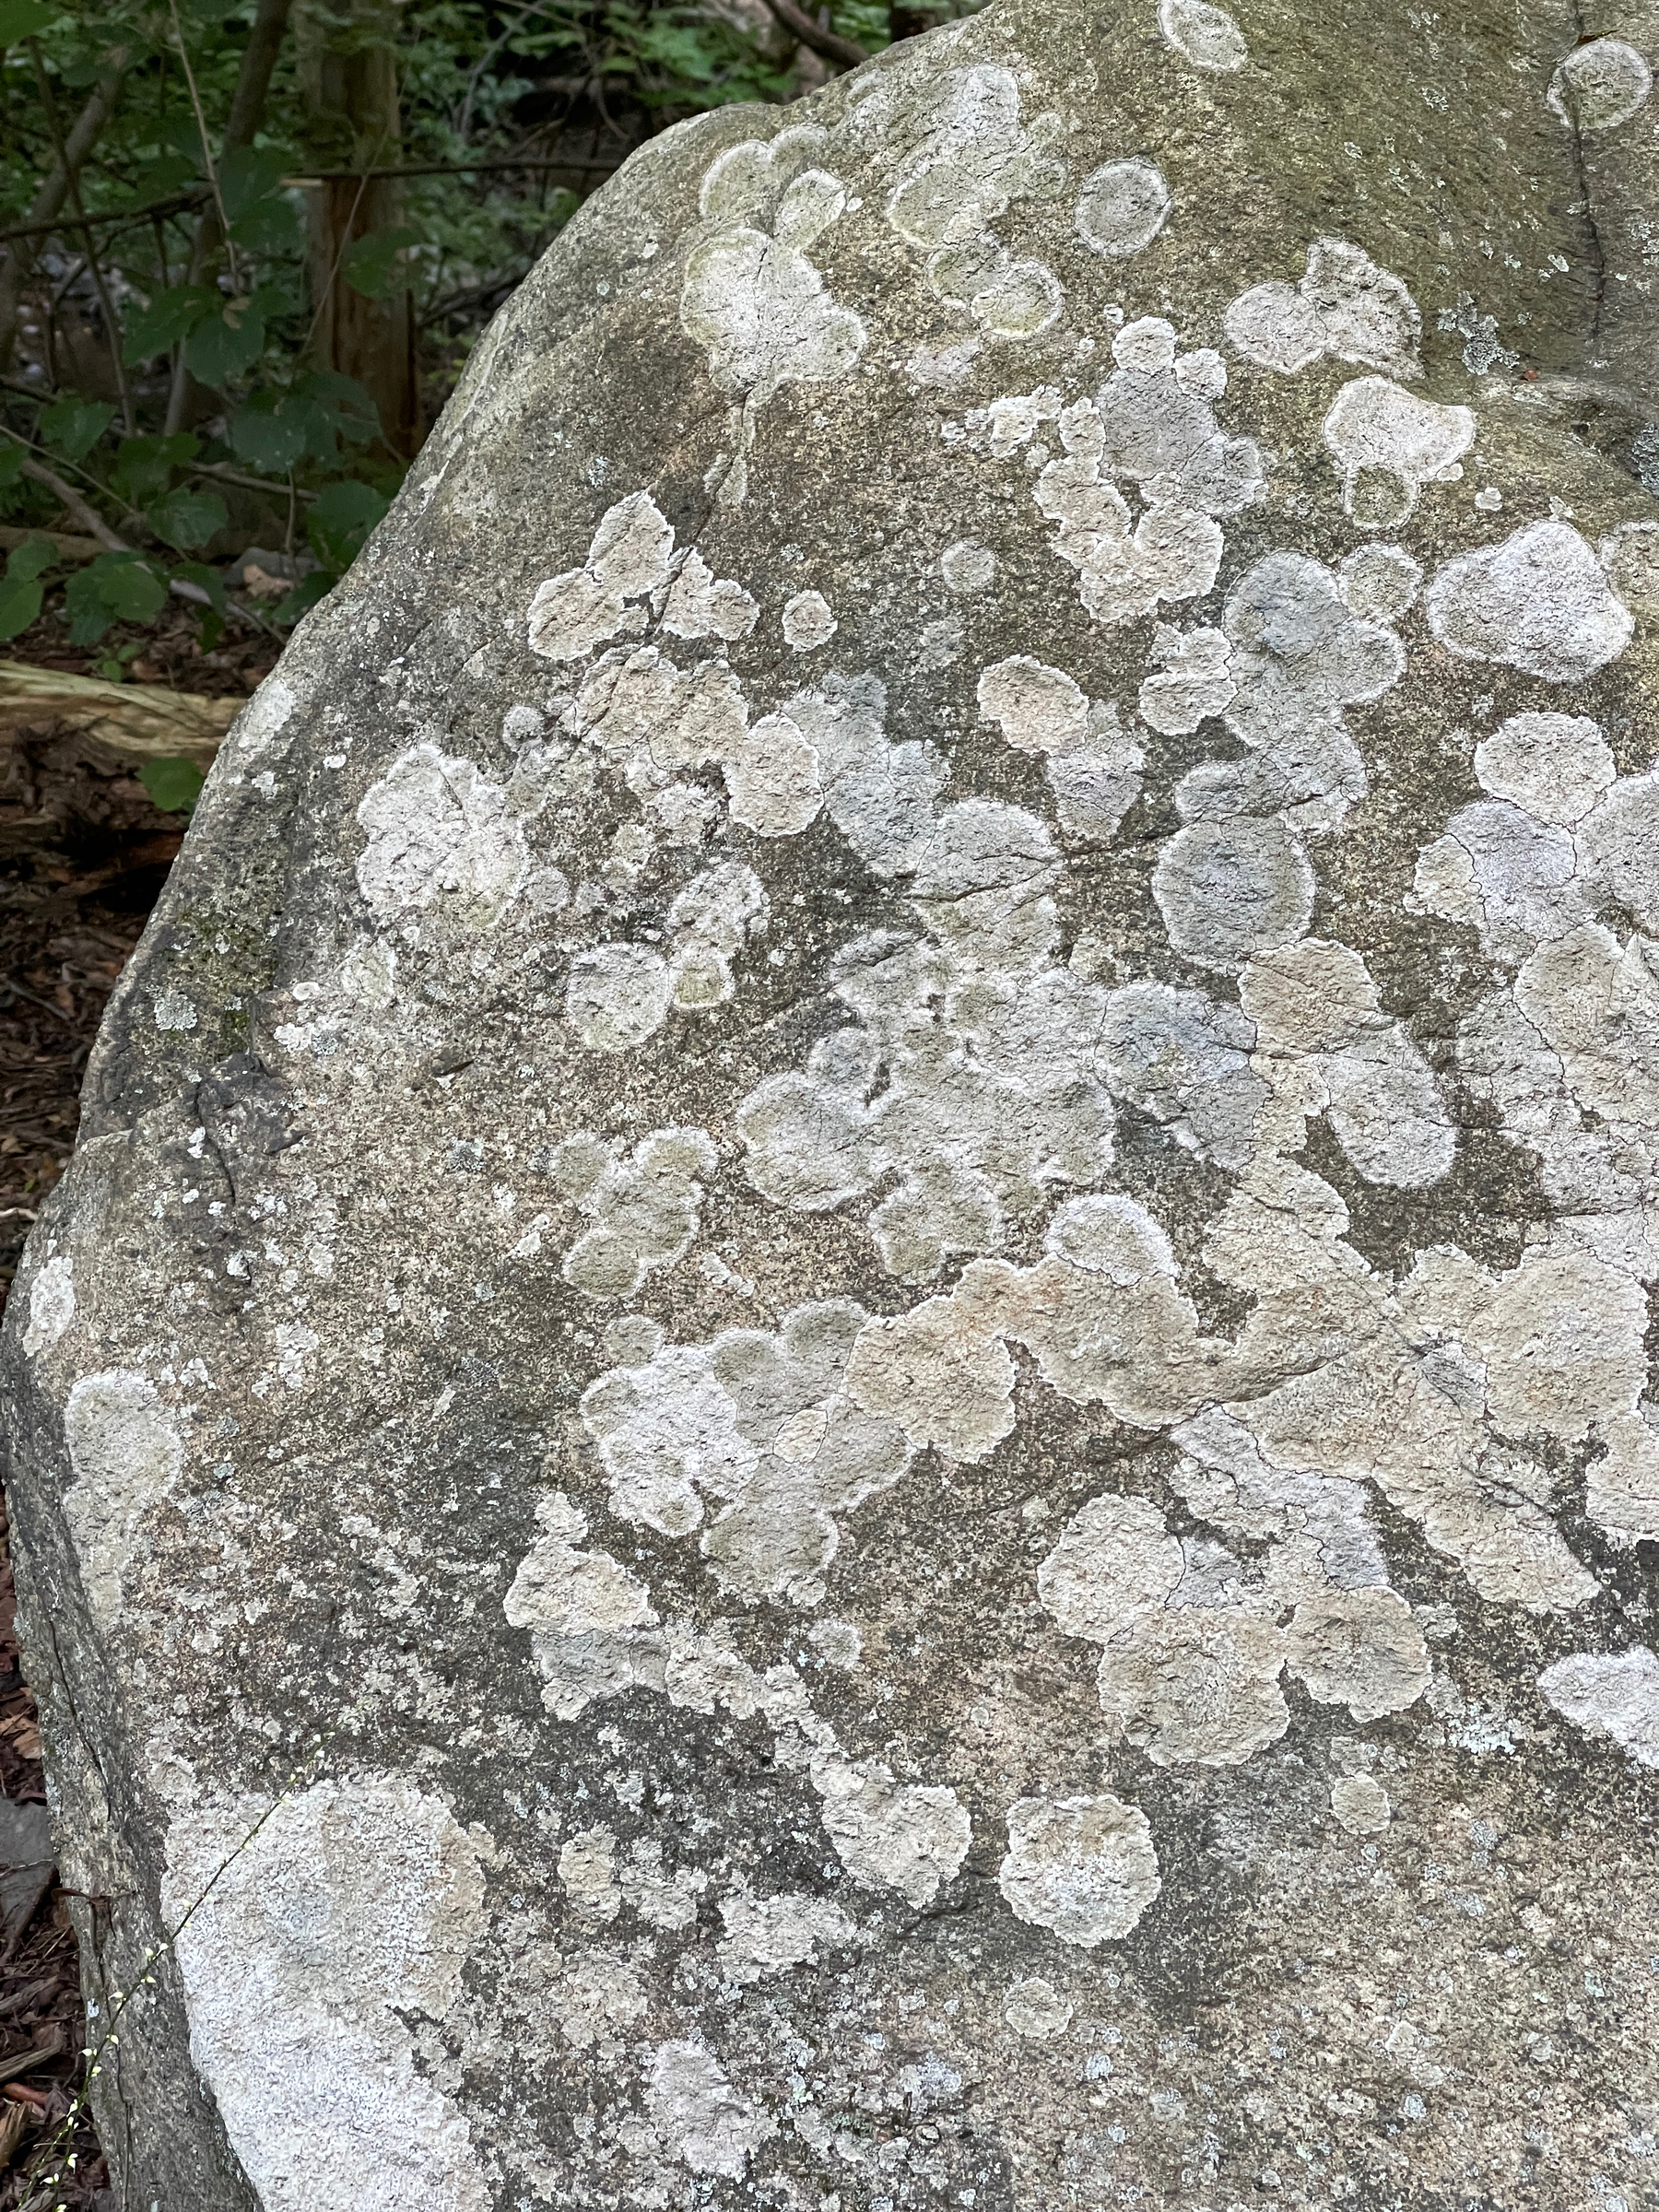 Closeup of boulder with lichen.